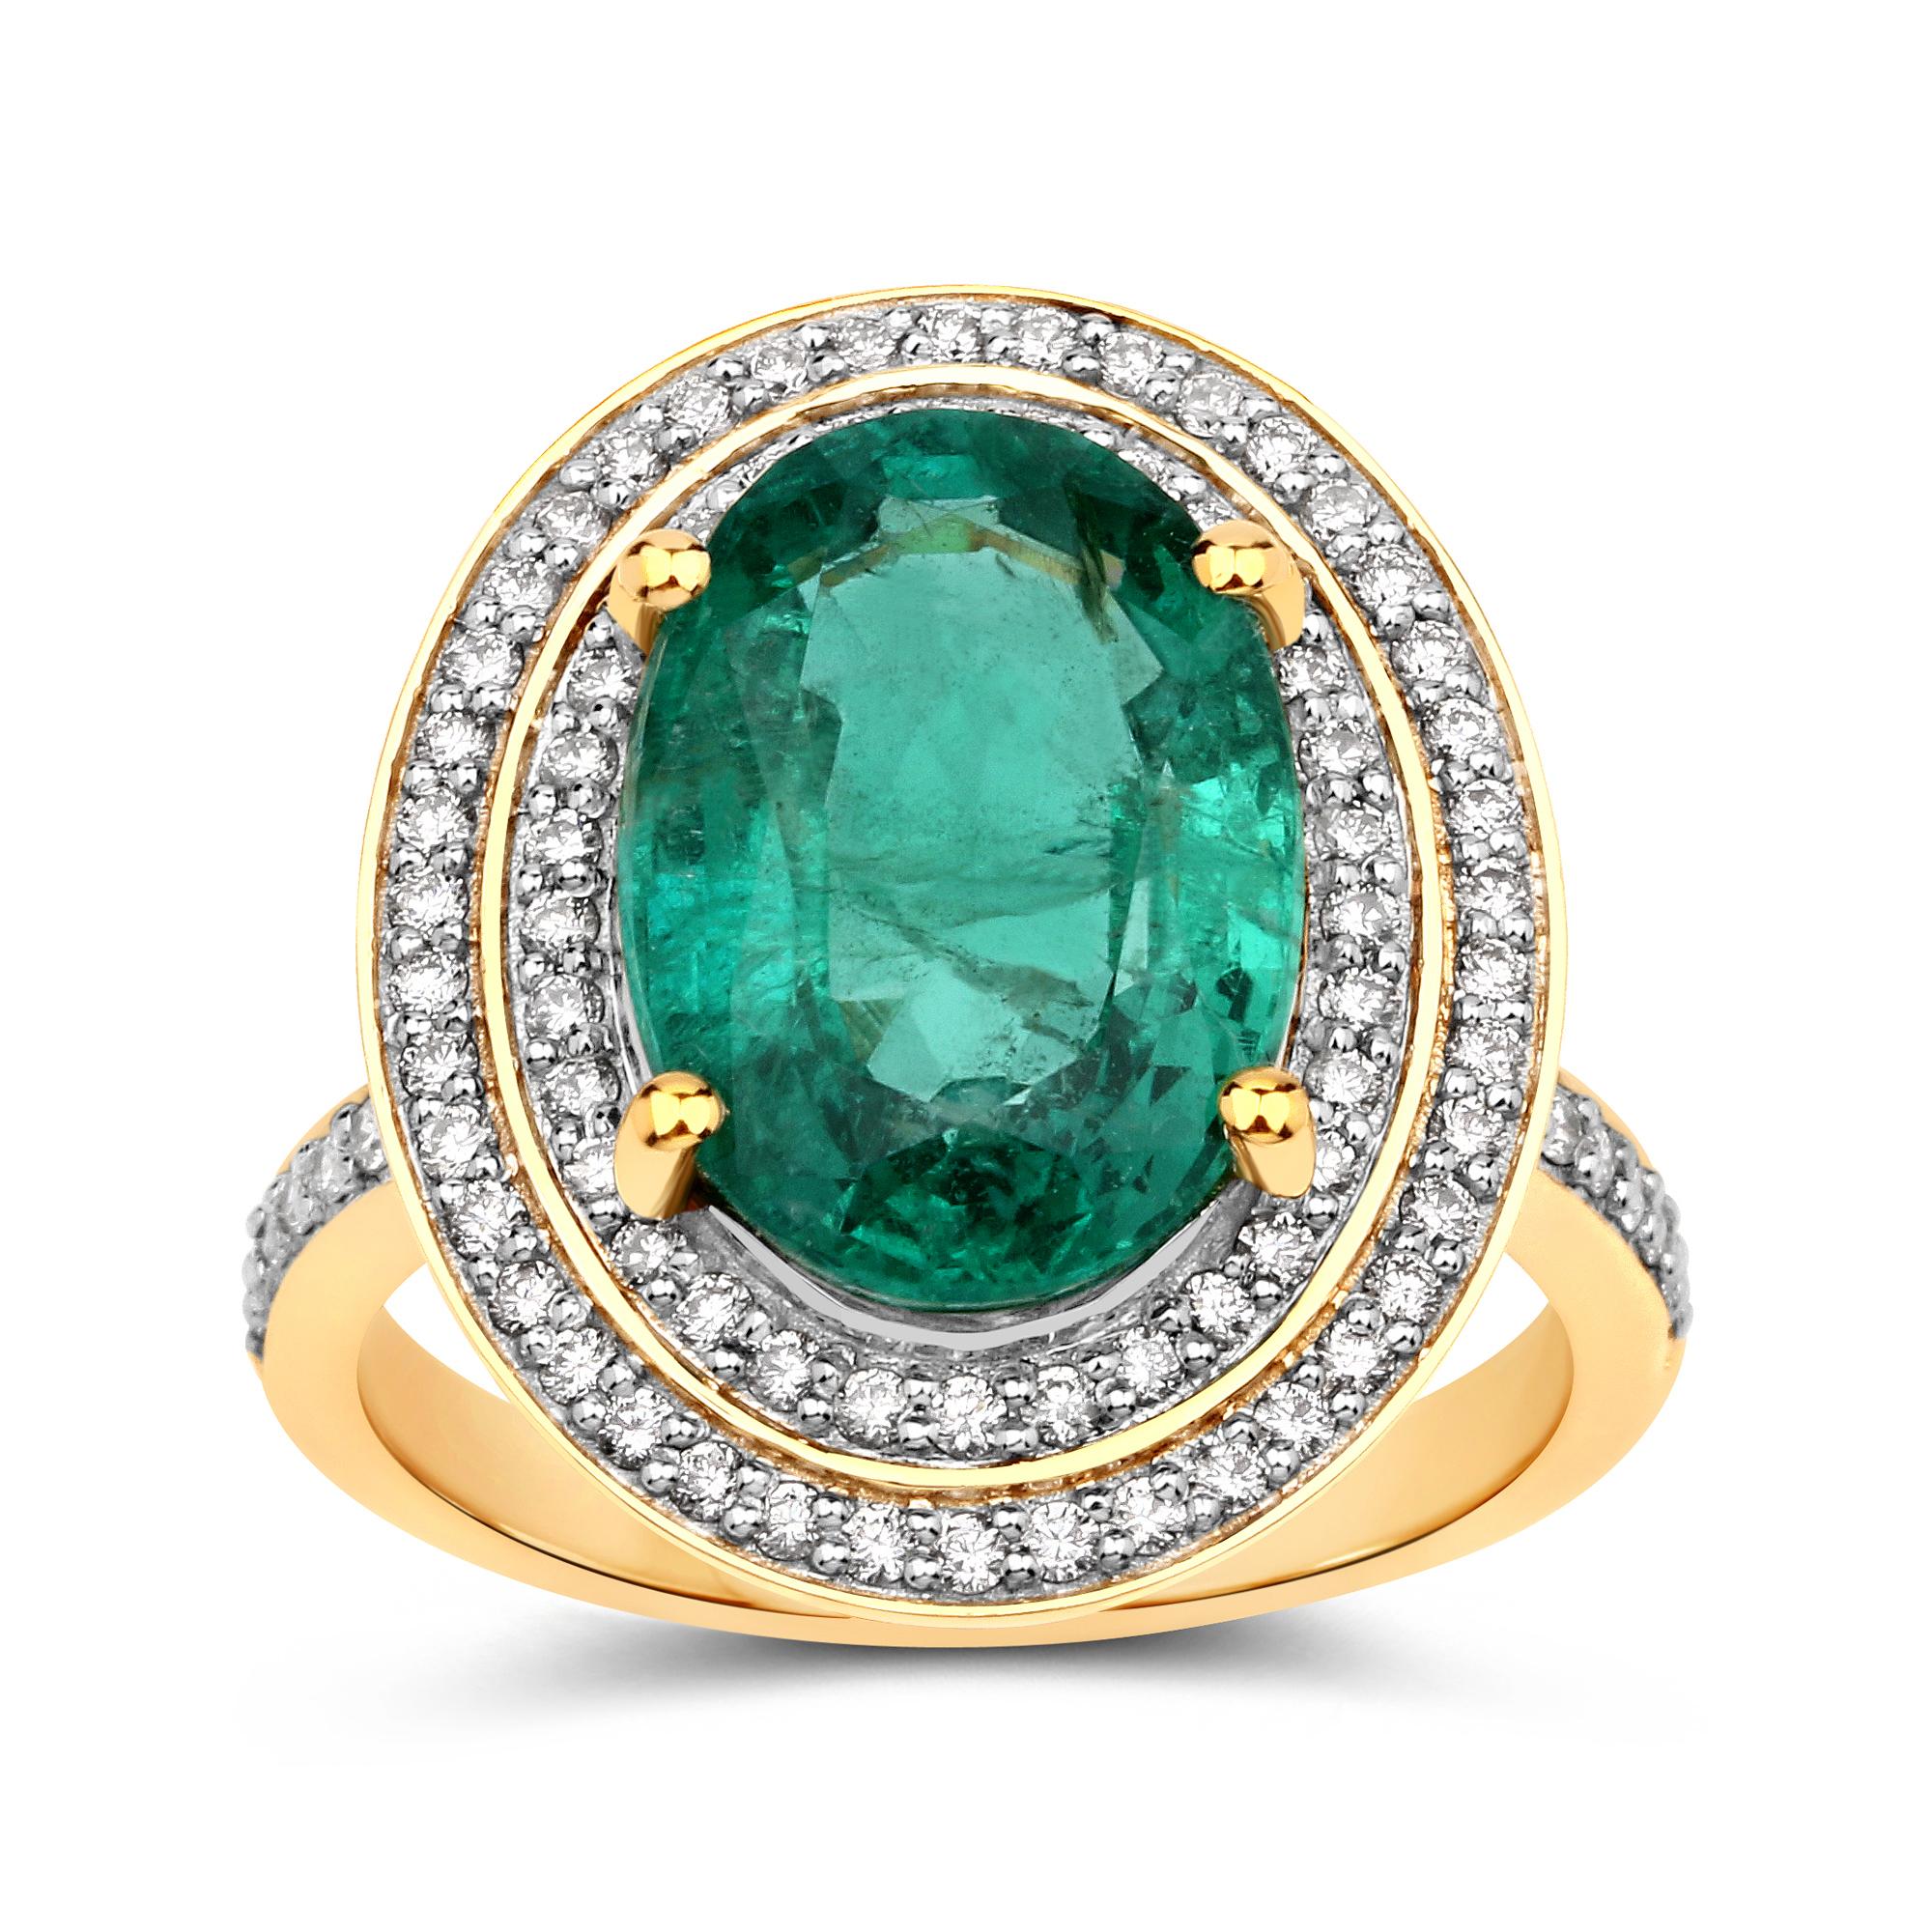 5.25 Carat Oval-shaped Zambian Emerald and 0.57 Carat White Diamond 18 Karat Yellow Gold Cocktail Ring

Center Stone Details: 
Stone: Zambian Emerald (Top Quality)
Shape: Oval Shape
Size: 13.50X9.60mm
Weight: 5.25 carat

Diamond Details:
Shape: